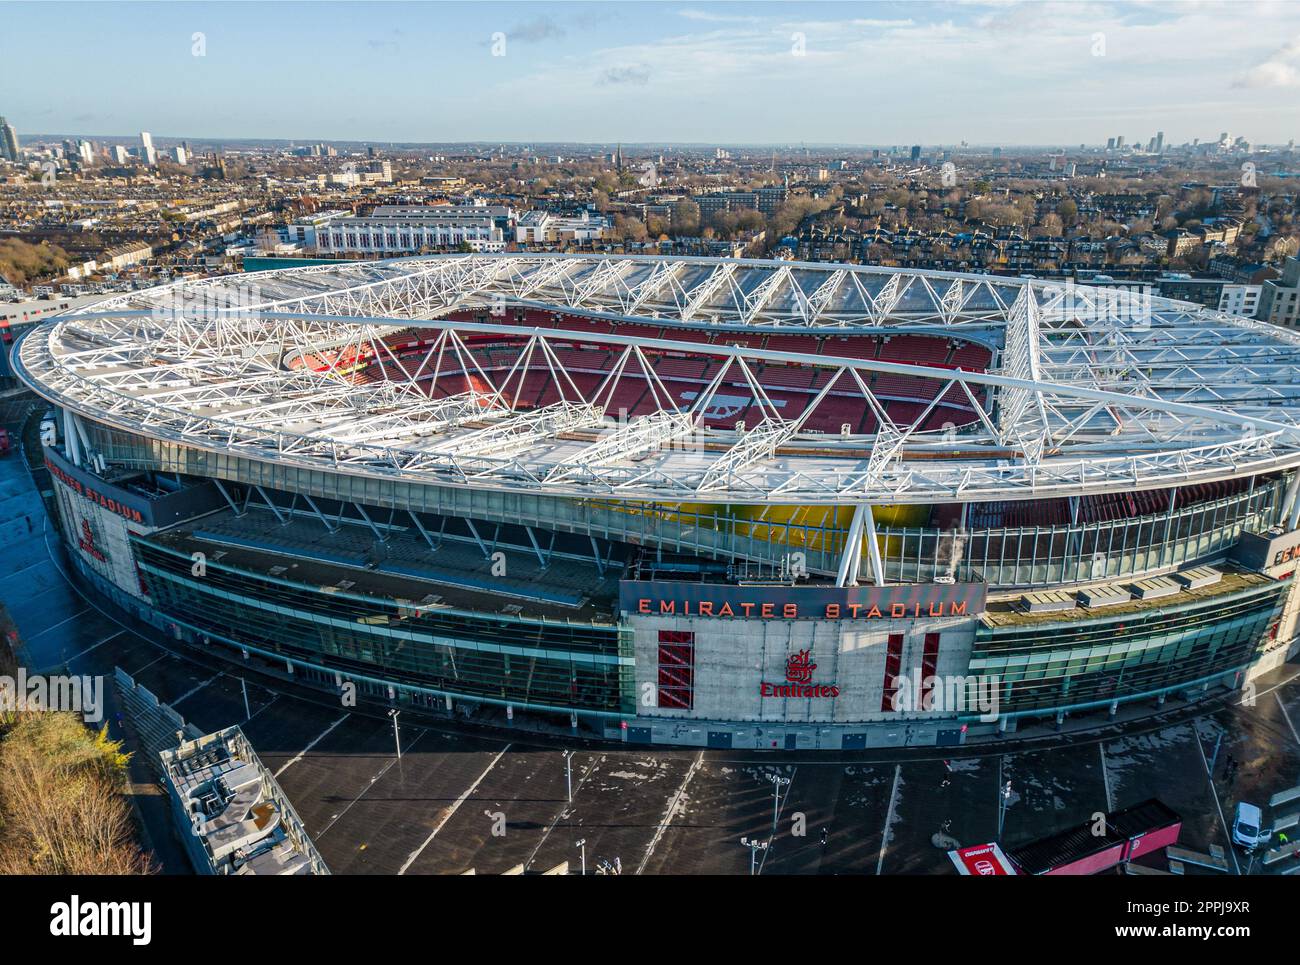 Emirates Stadium - home of Arsenal London soccer club - aerial view - LONDON, UK - DECEMBER 20, 2022 Stock Photo